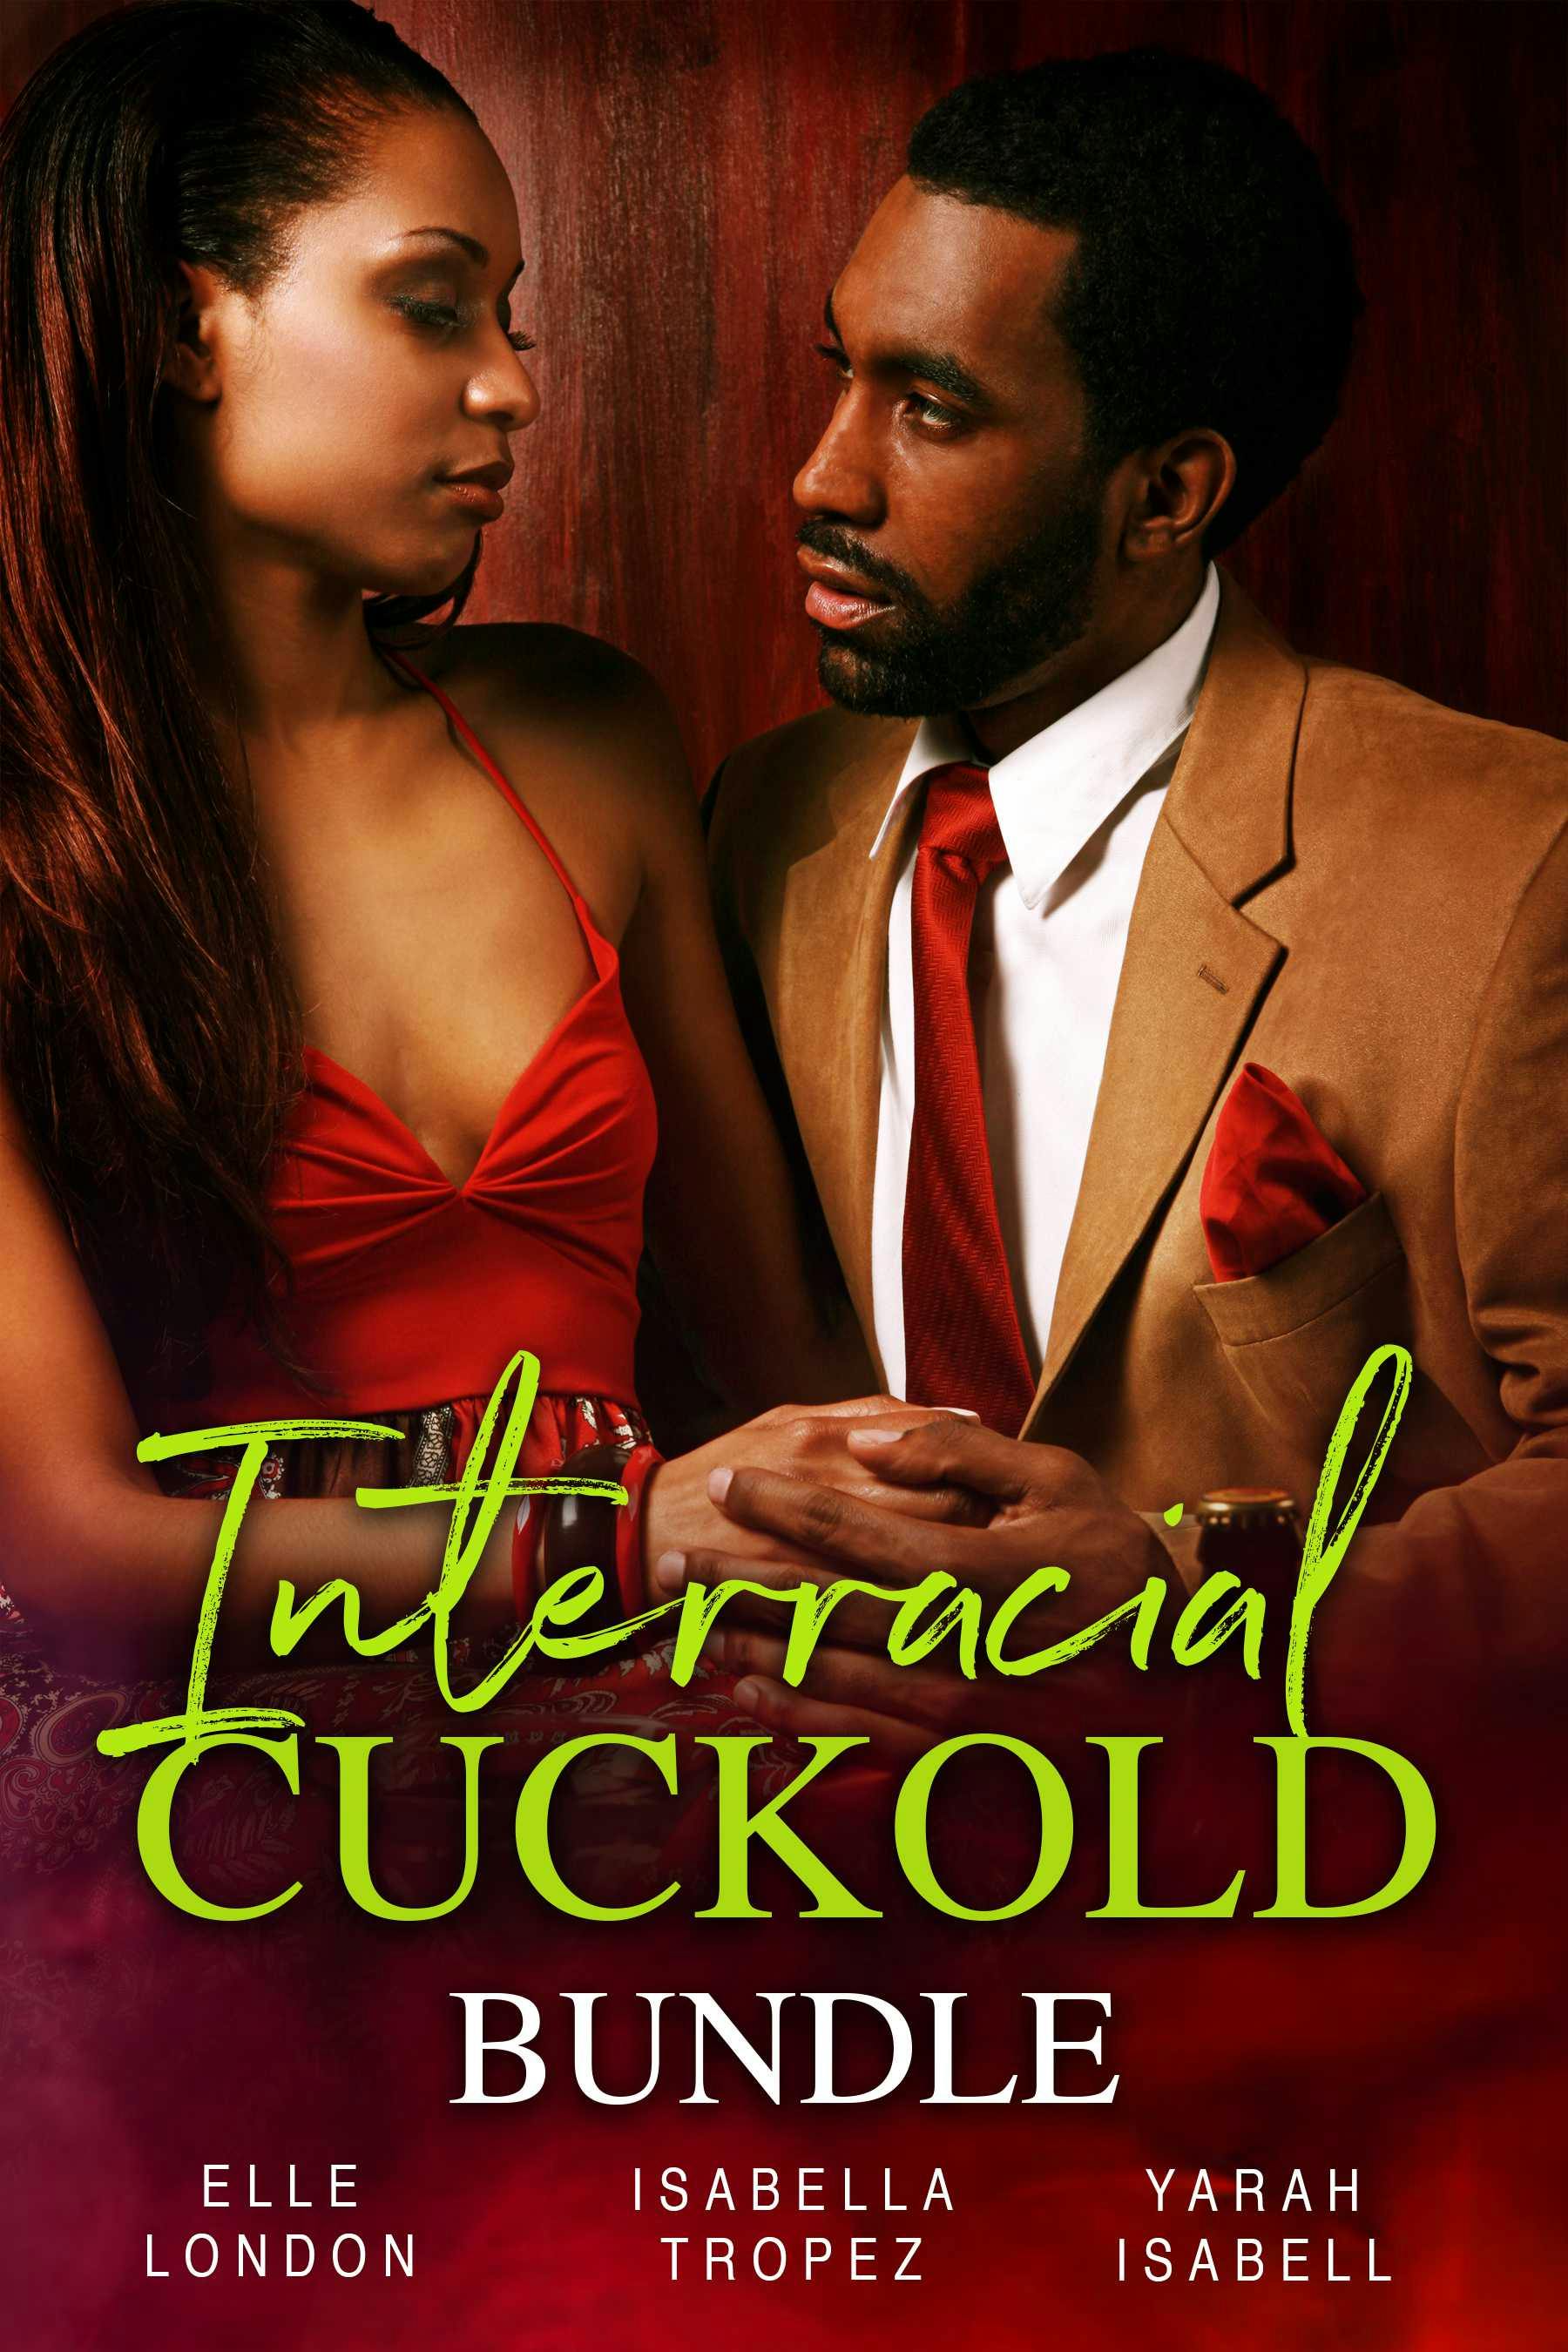 Interracial Cuckold Bundle - Elle London, Isabella Tropez, Yarah Isabell